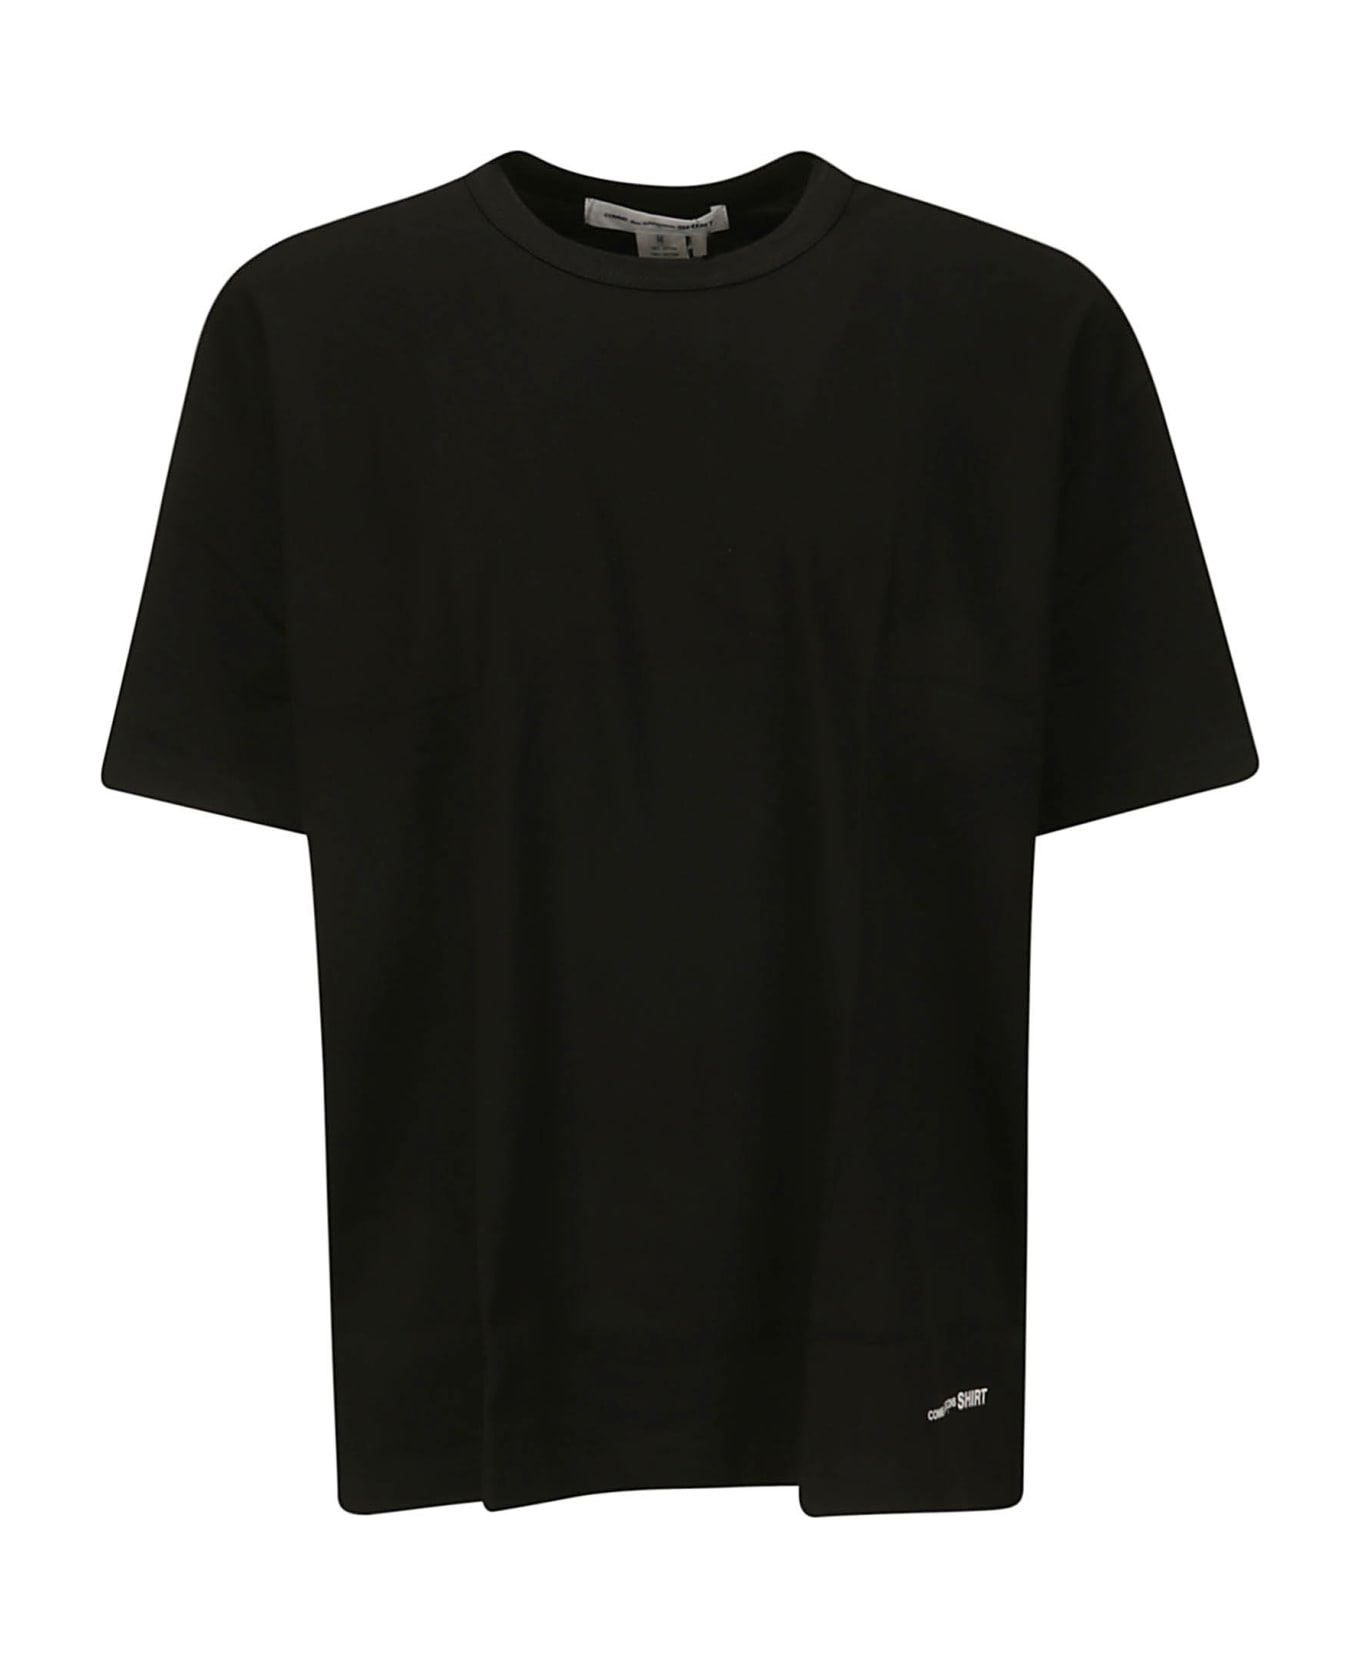 Comme des Garçons Shirt Cotton Jersey Plain With Printed Cdg Shirt L - BLACK シャツ